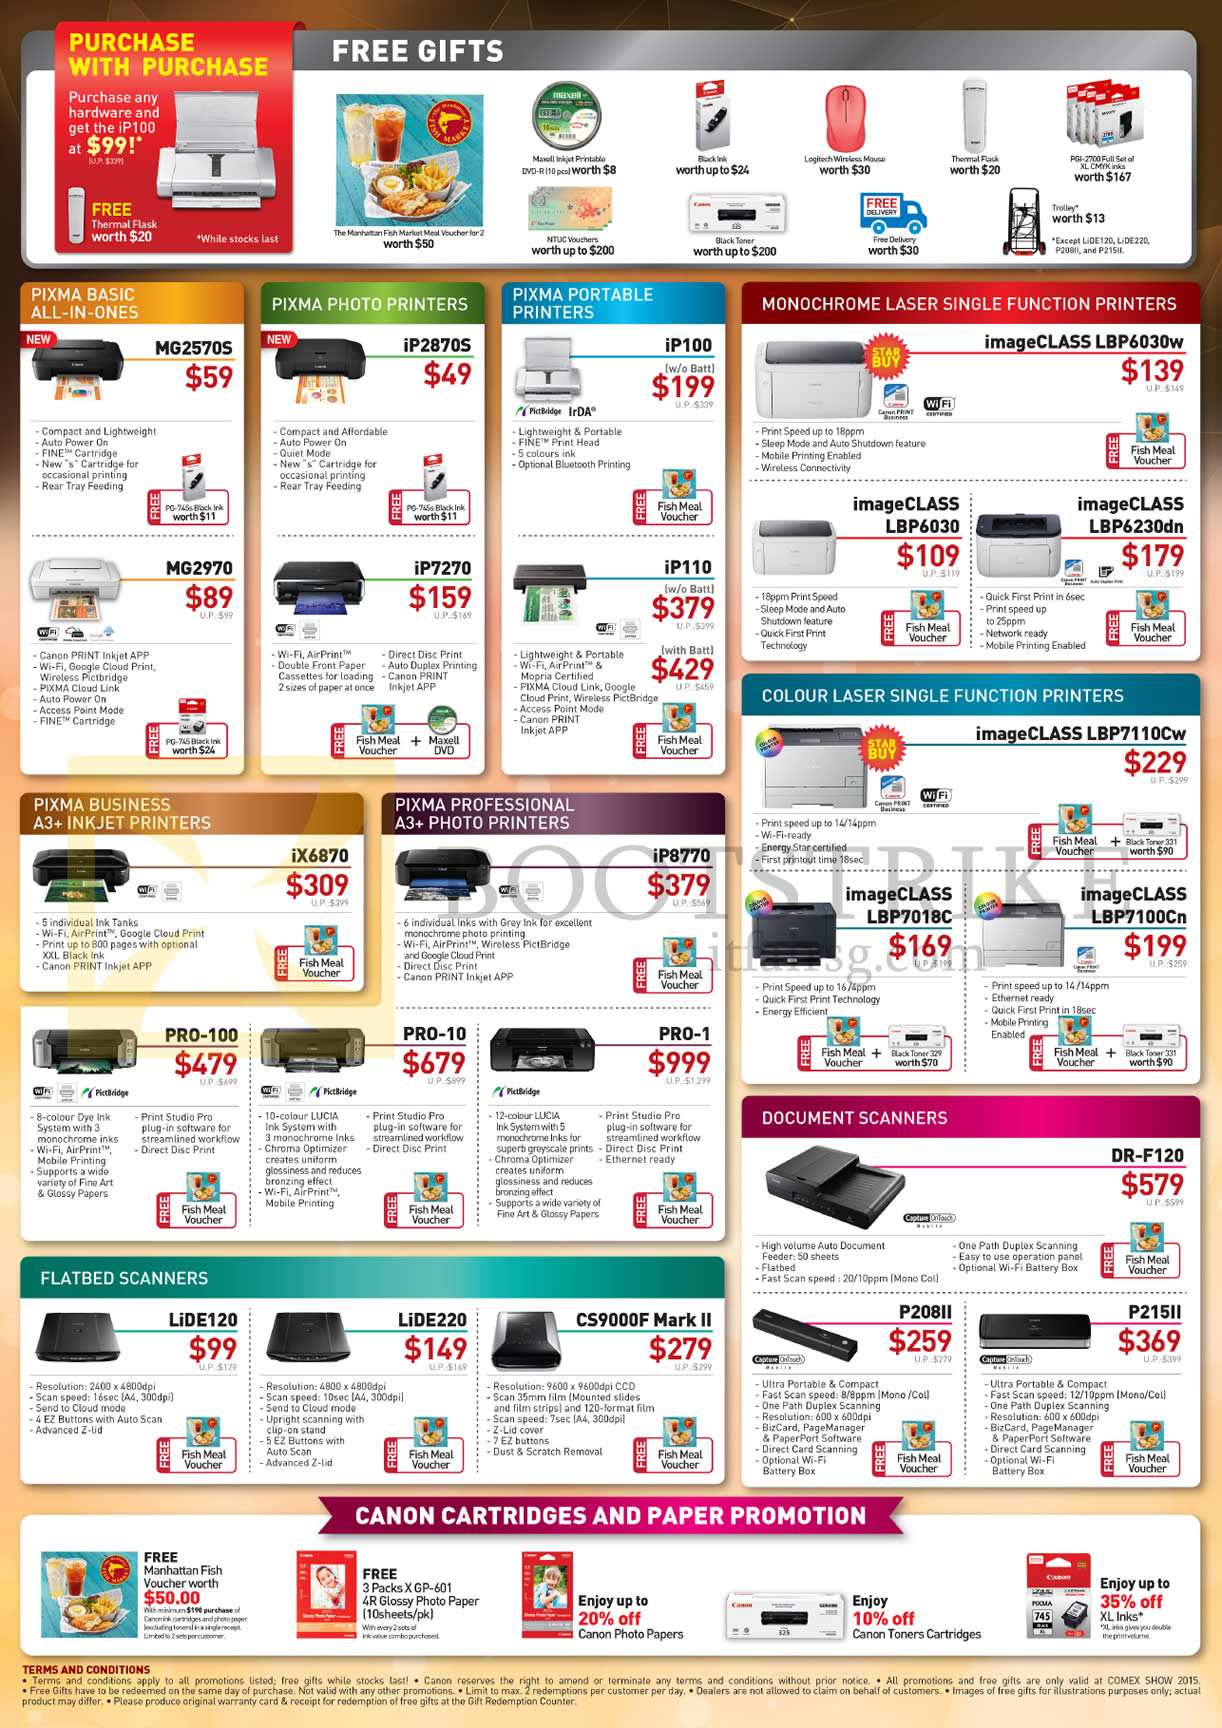 COMEX 2015 price list image brochure of Canon Printers, Scanners, MG2570S, 2970, IP2870S, X6870, IP8770, PRO-100, 10, 1, LiDE 120 220, CS9000F Mark II, DR-F120, P208II, P215II, ImageCLASS LBP6030W, 6030, 7018c, 7100Cn